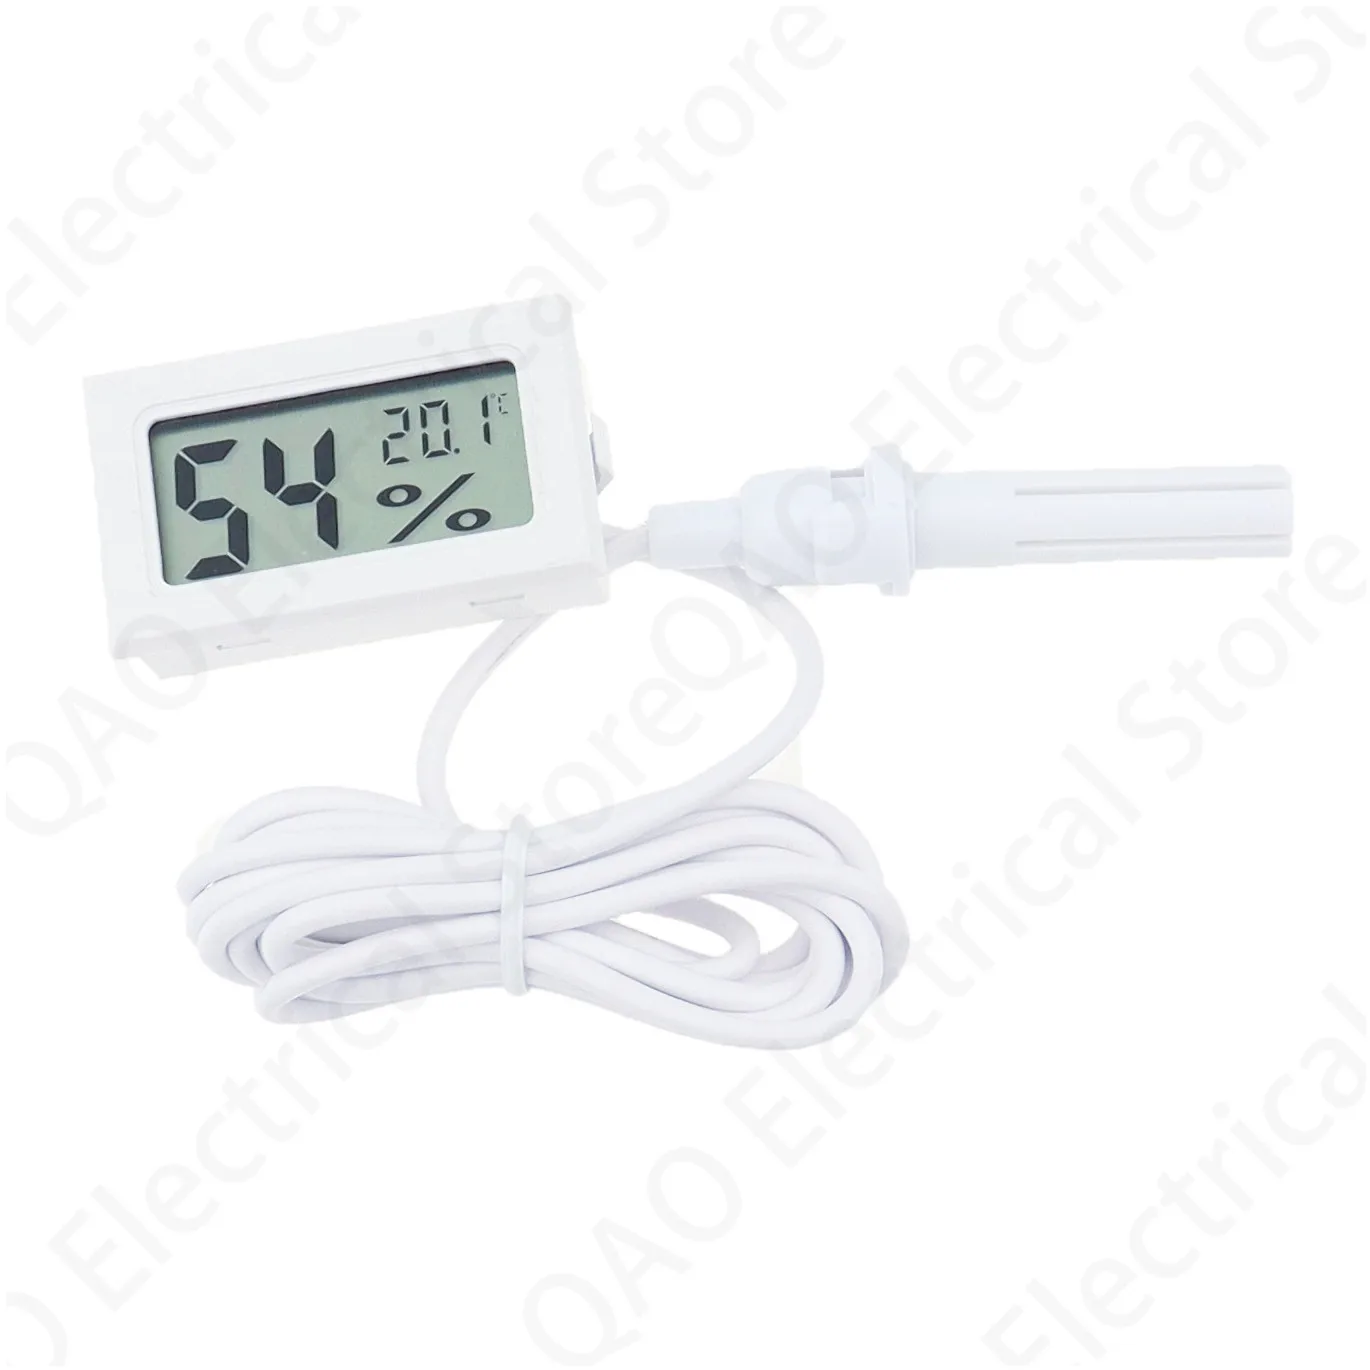 https://ae01.alicdn.com/kf/Hb87ca20b19b74d82aa9b09d6d2b8c3a1m/Mini-LCD-Digital-Thermometer-Hygrometer-Thermostat-Indoor-Convenient-Temperature-Sensor-Humidity-Meter-Gauge-Instruments-Probe.jpg